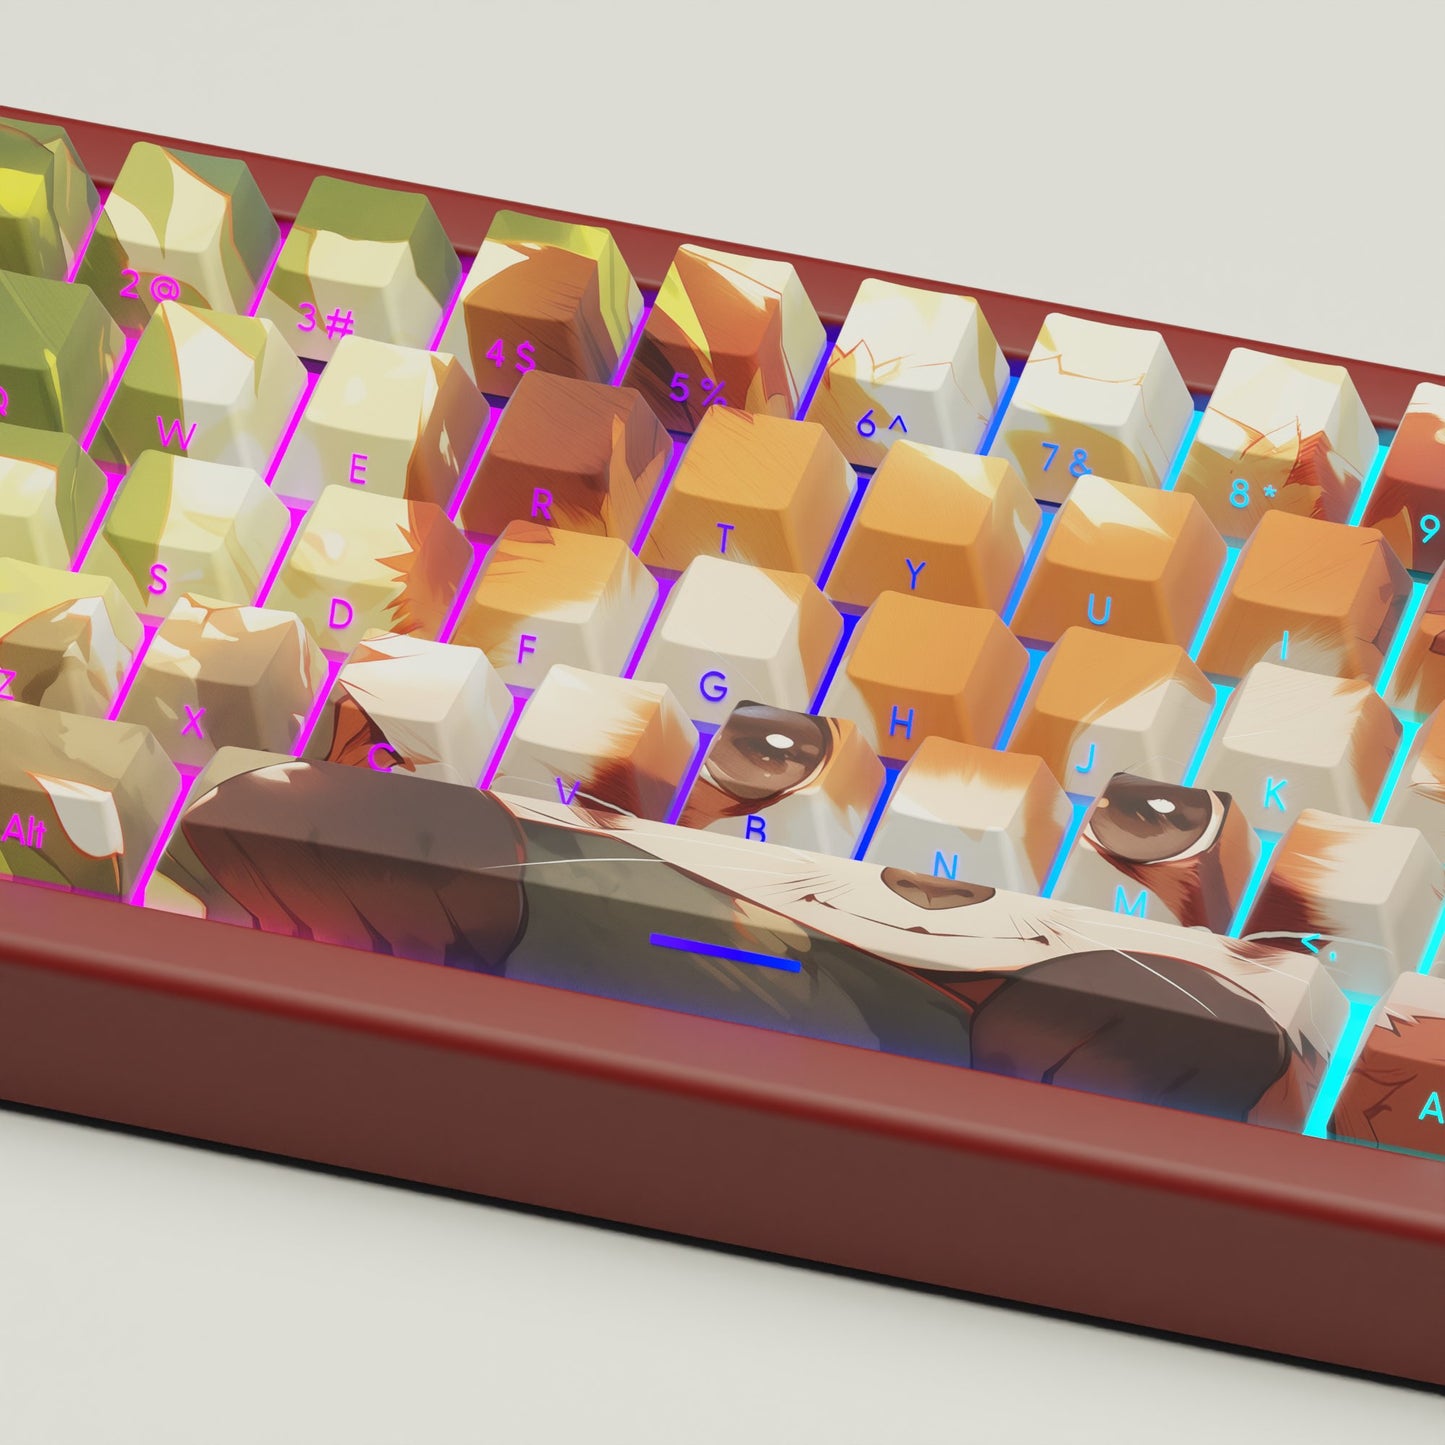 Red Panda GMK67 Keyboard | Designed By Serenity Starlight - Goblintechkeys